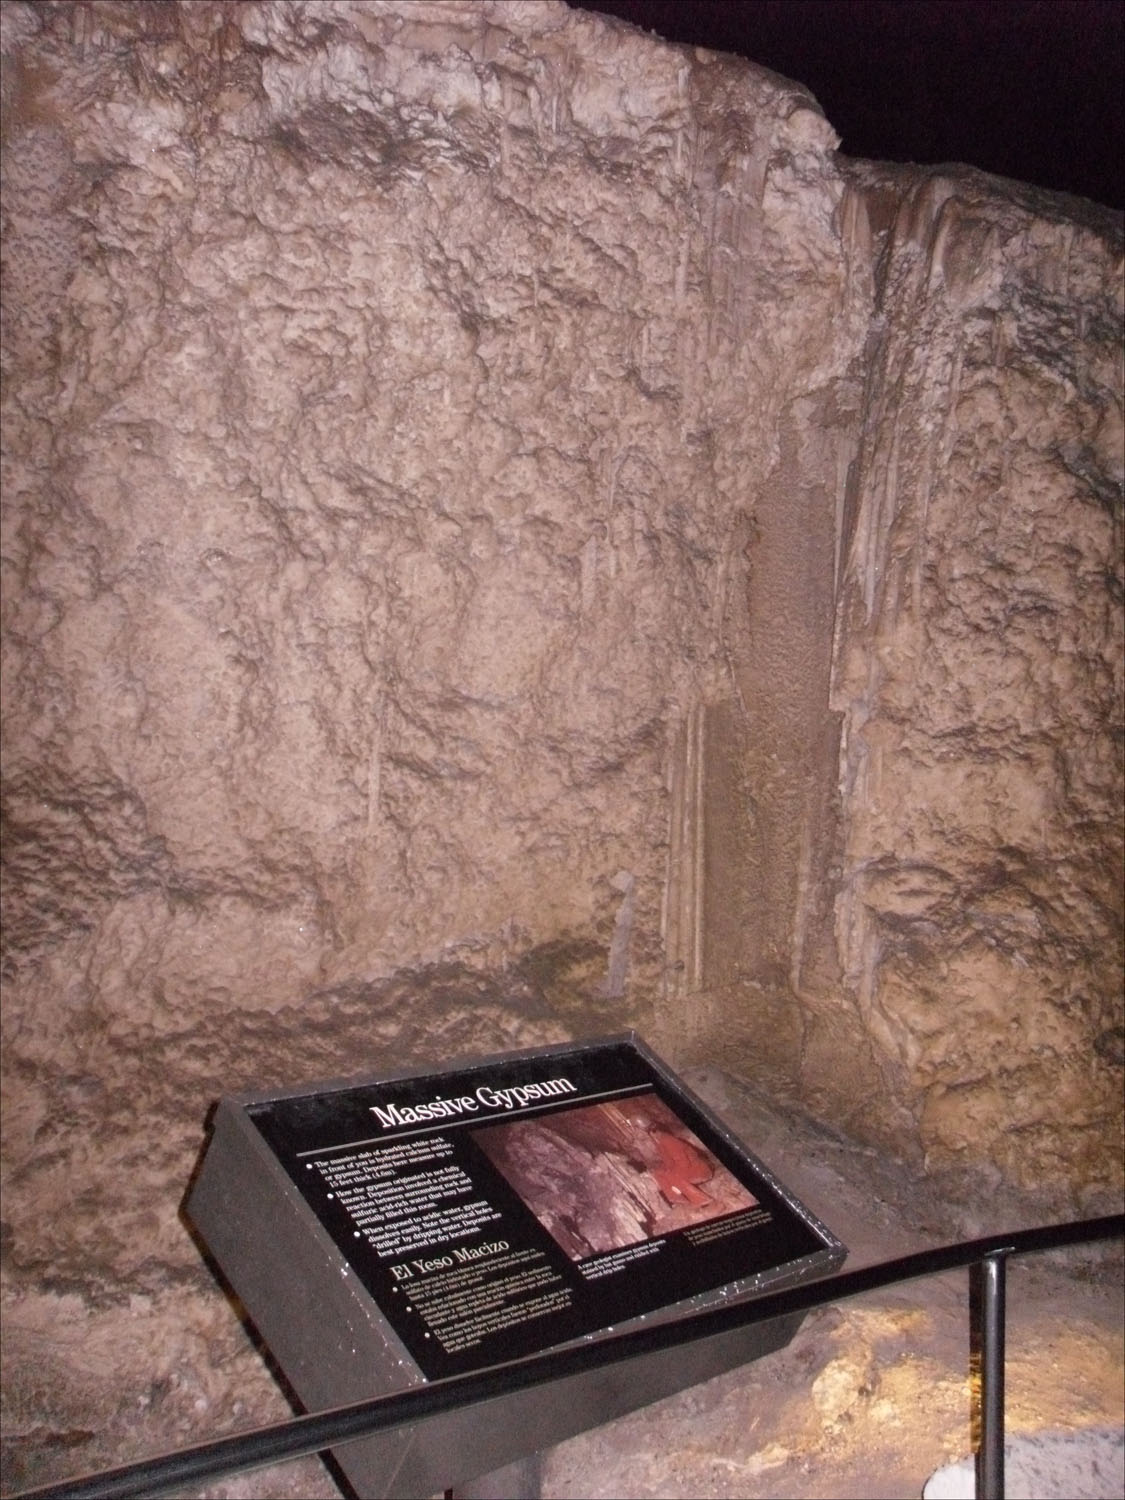 Carlsbad Caverns, NM-wall of massive gypsum